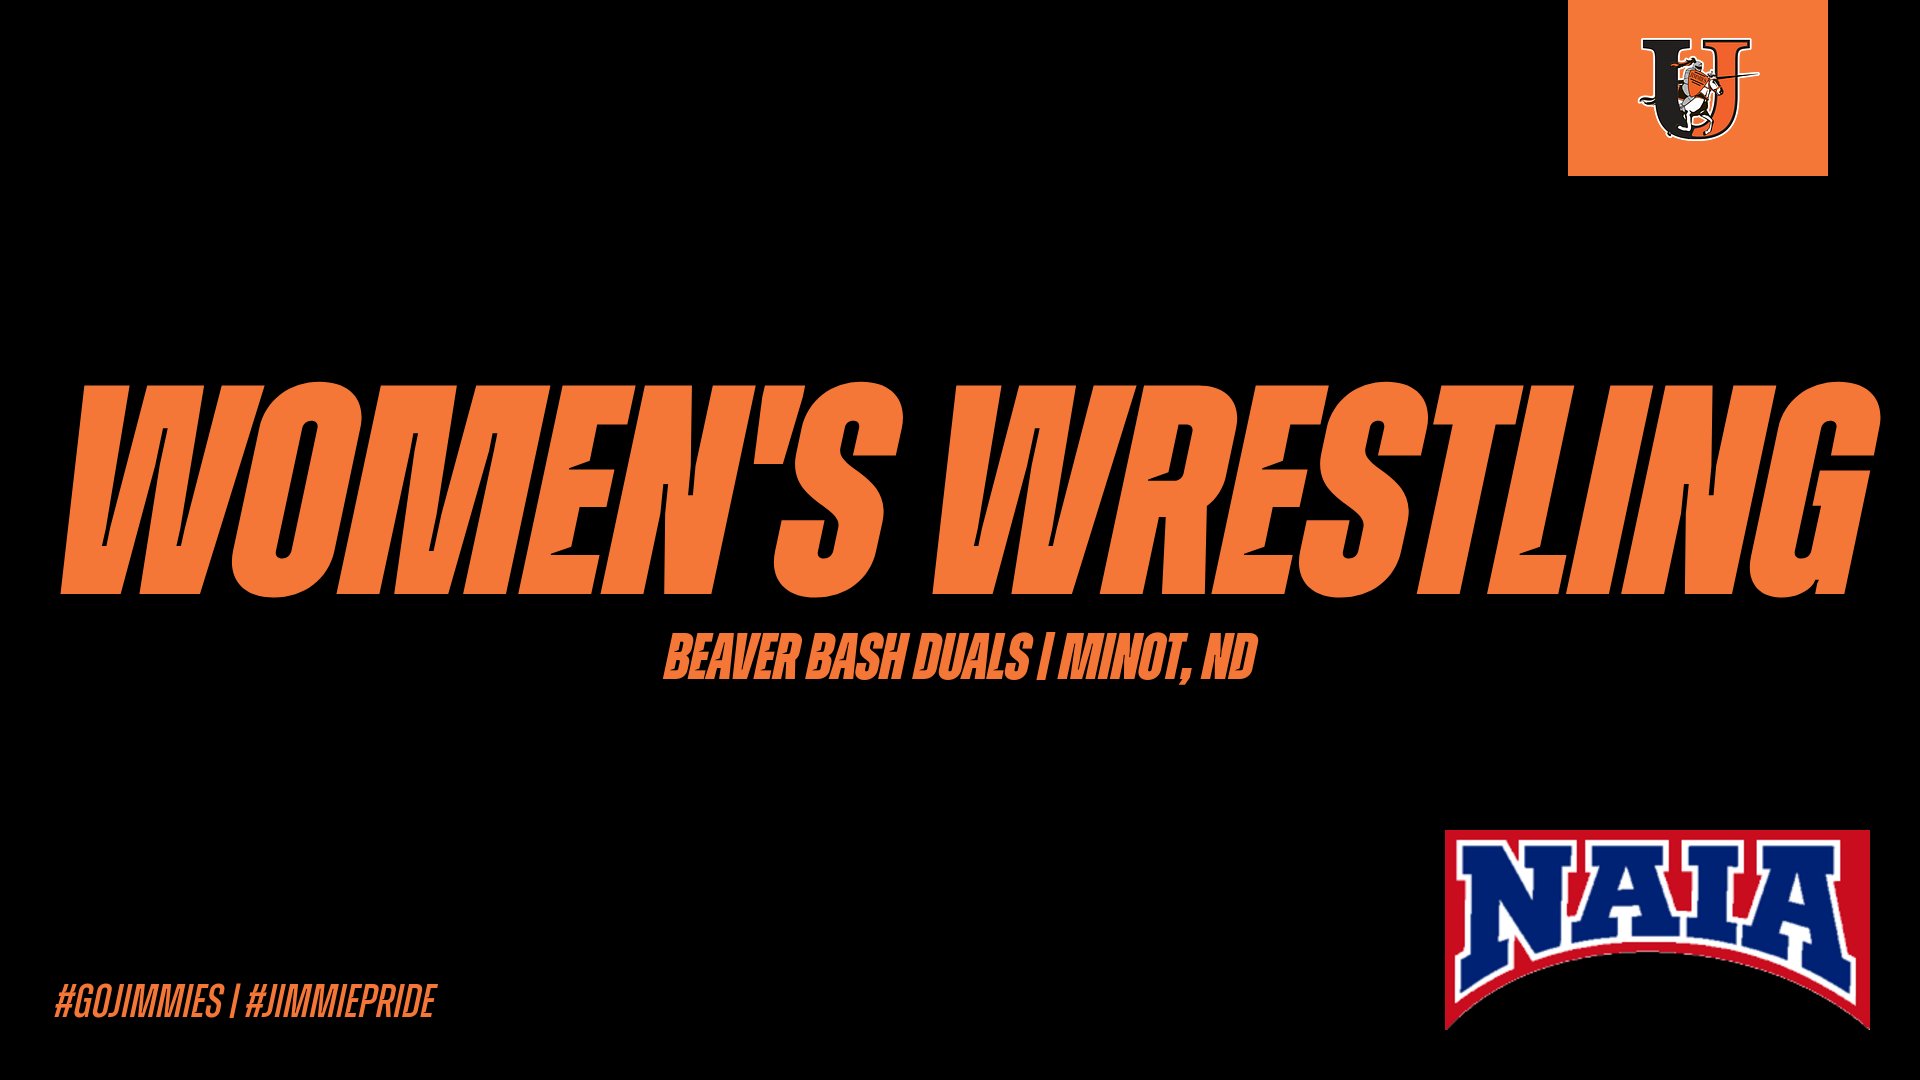 Women's wrestling goes 2-2 at Beaver Bash Duals